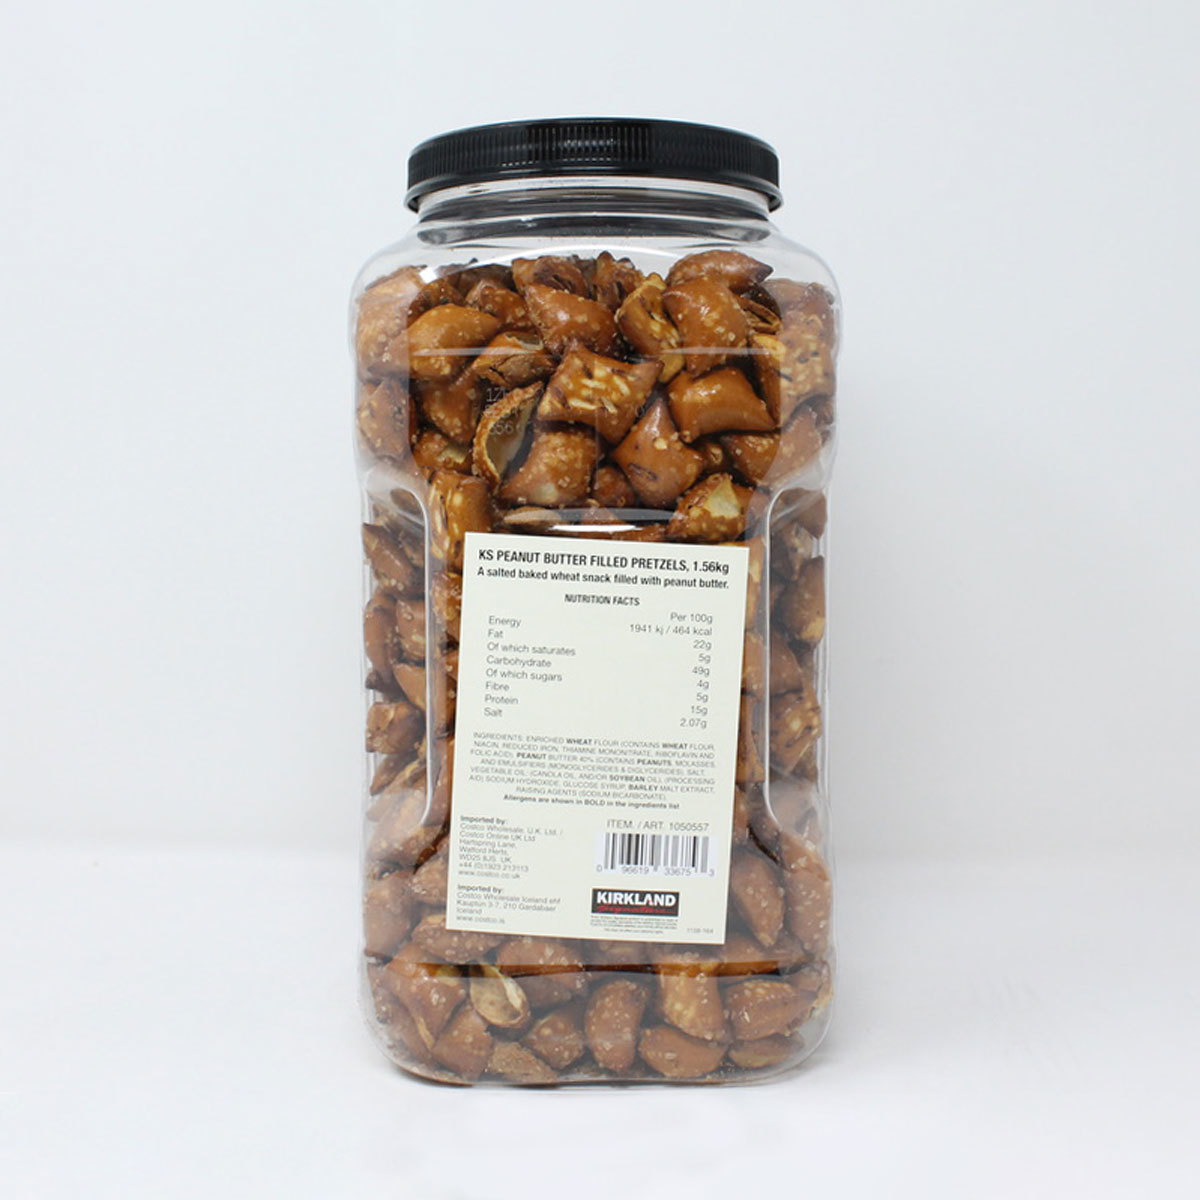 Kirkland Signature Peanut Butter Pretzel, 1.56kg 1050557